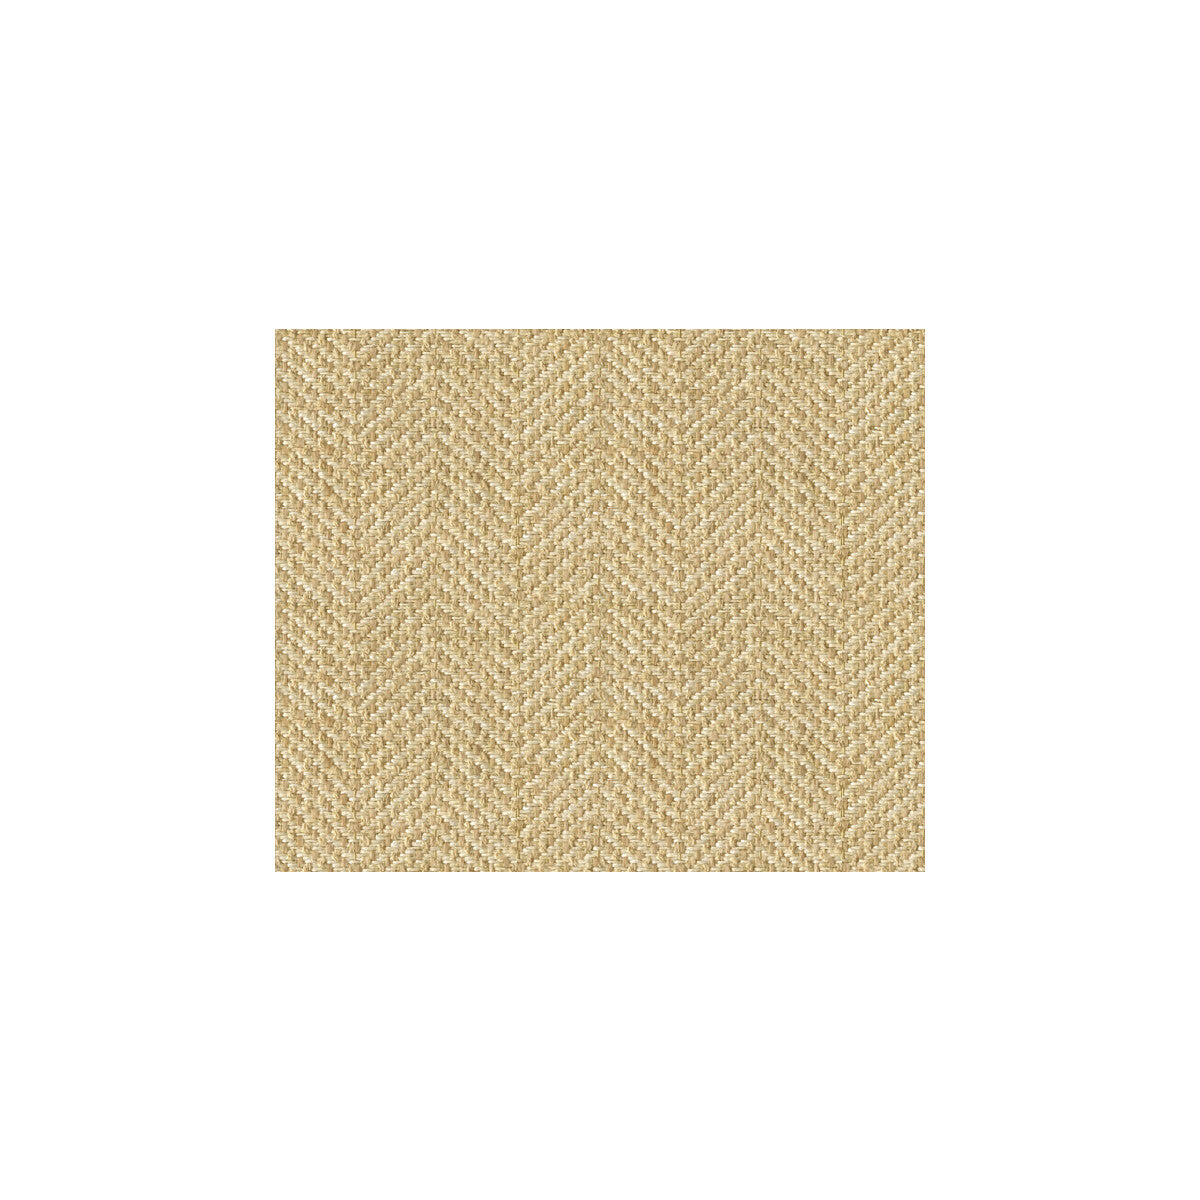 Kravet Smart fabric in 31748-116 color - pattern 31748.116.0 - by Kravet Smart